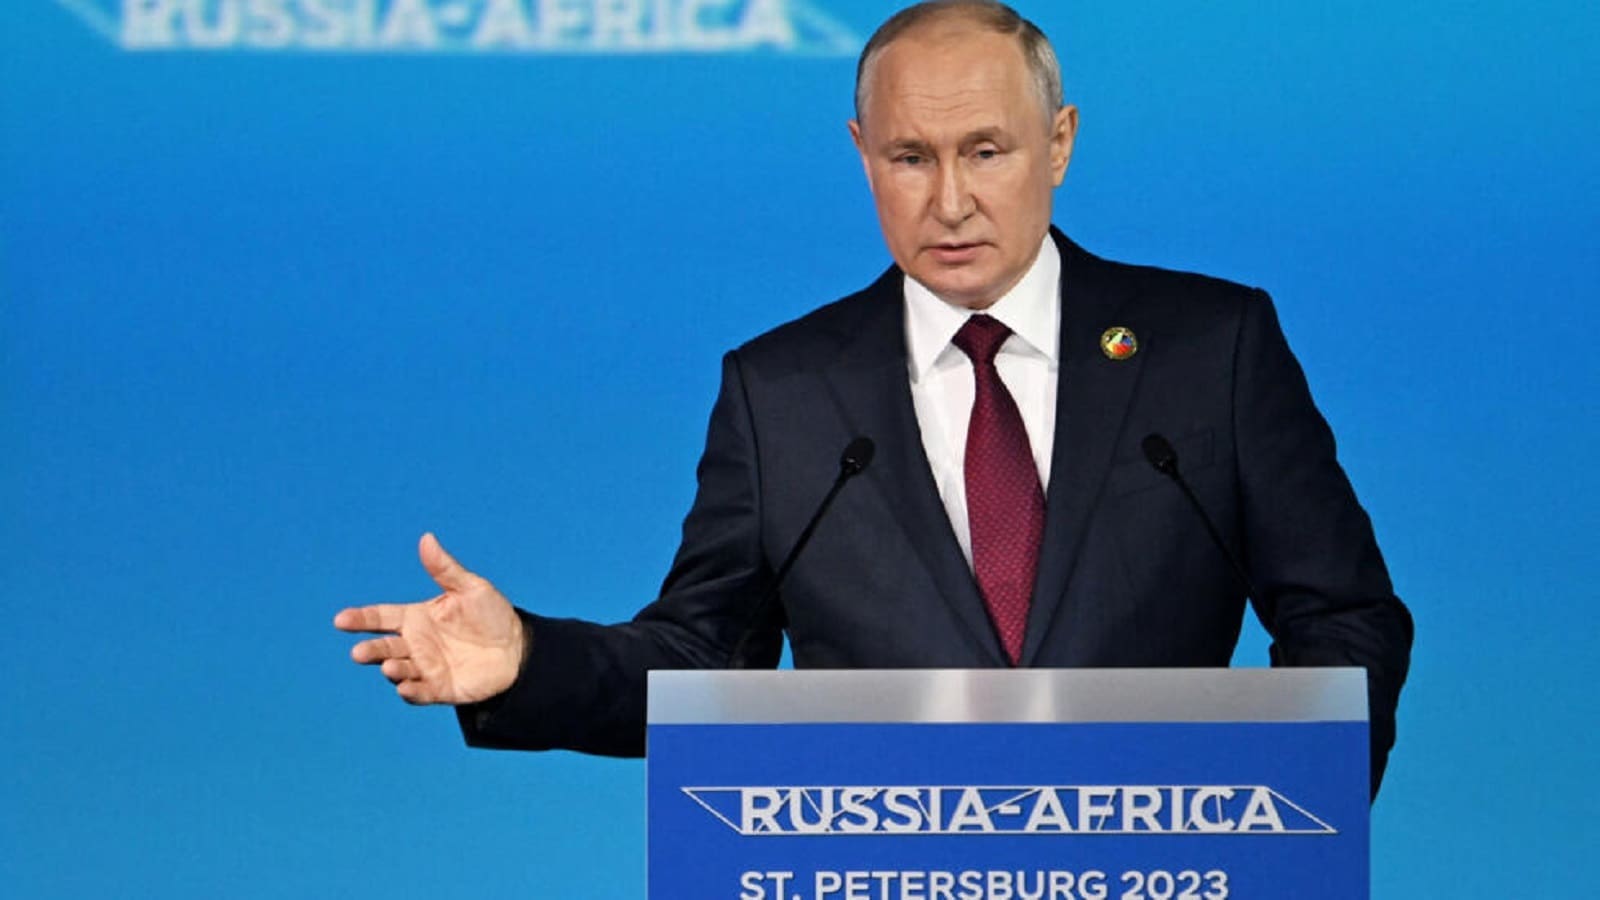 Putin pledges grain supply to Africa after Black Sea grain deal dies: Russia-Africa Summit 